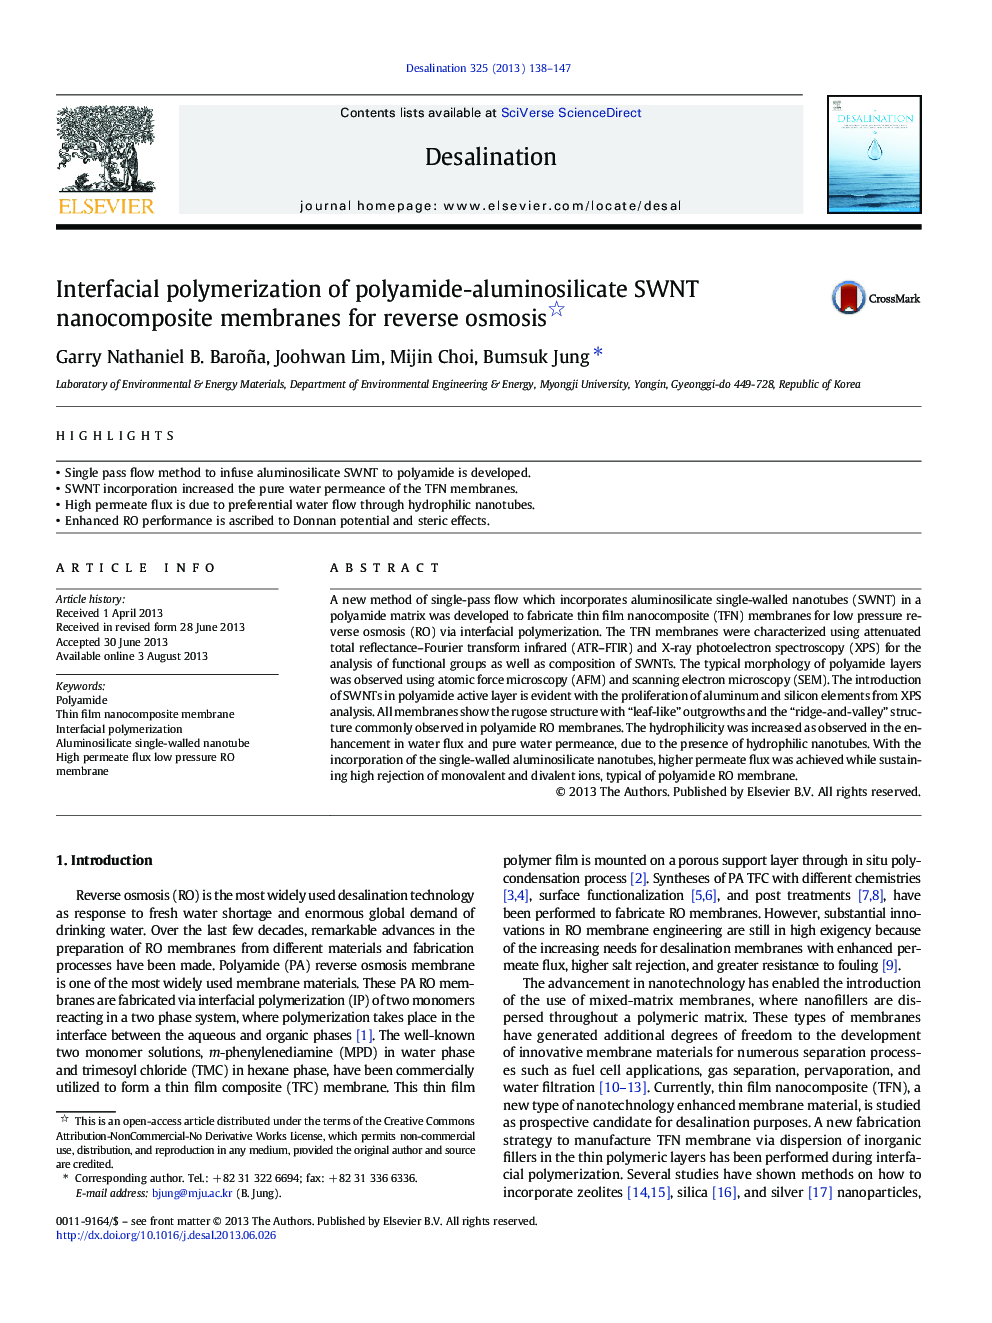 Interfacial polymerization of polyamide-aluminosilicate SWNT nanocomposite membranes for reverse osmosis